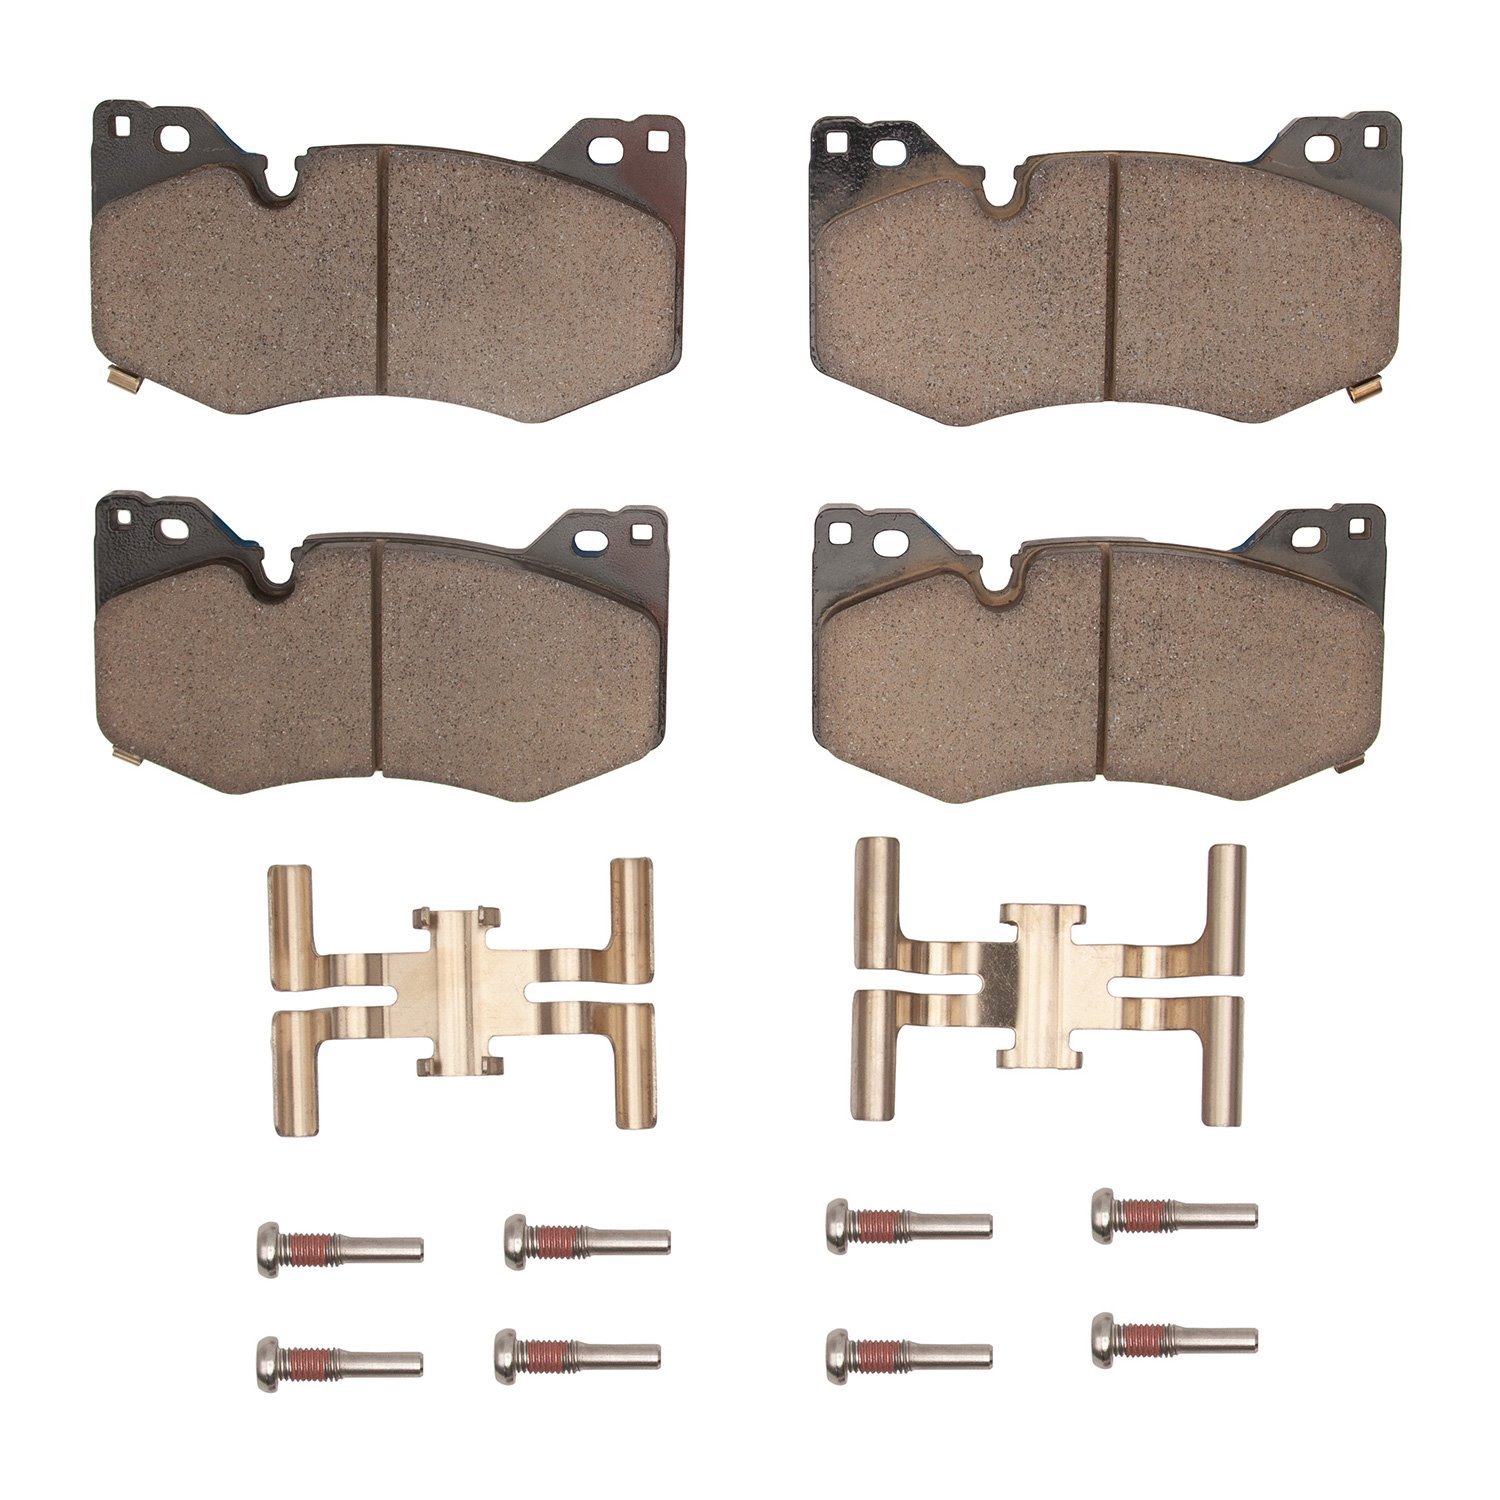 1310-2312-01 3000-Series Ceramic Brake Pads & Hardware Kit, Fits Select GM, Position: Front